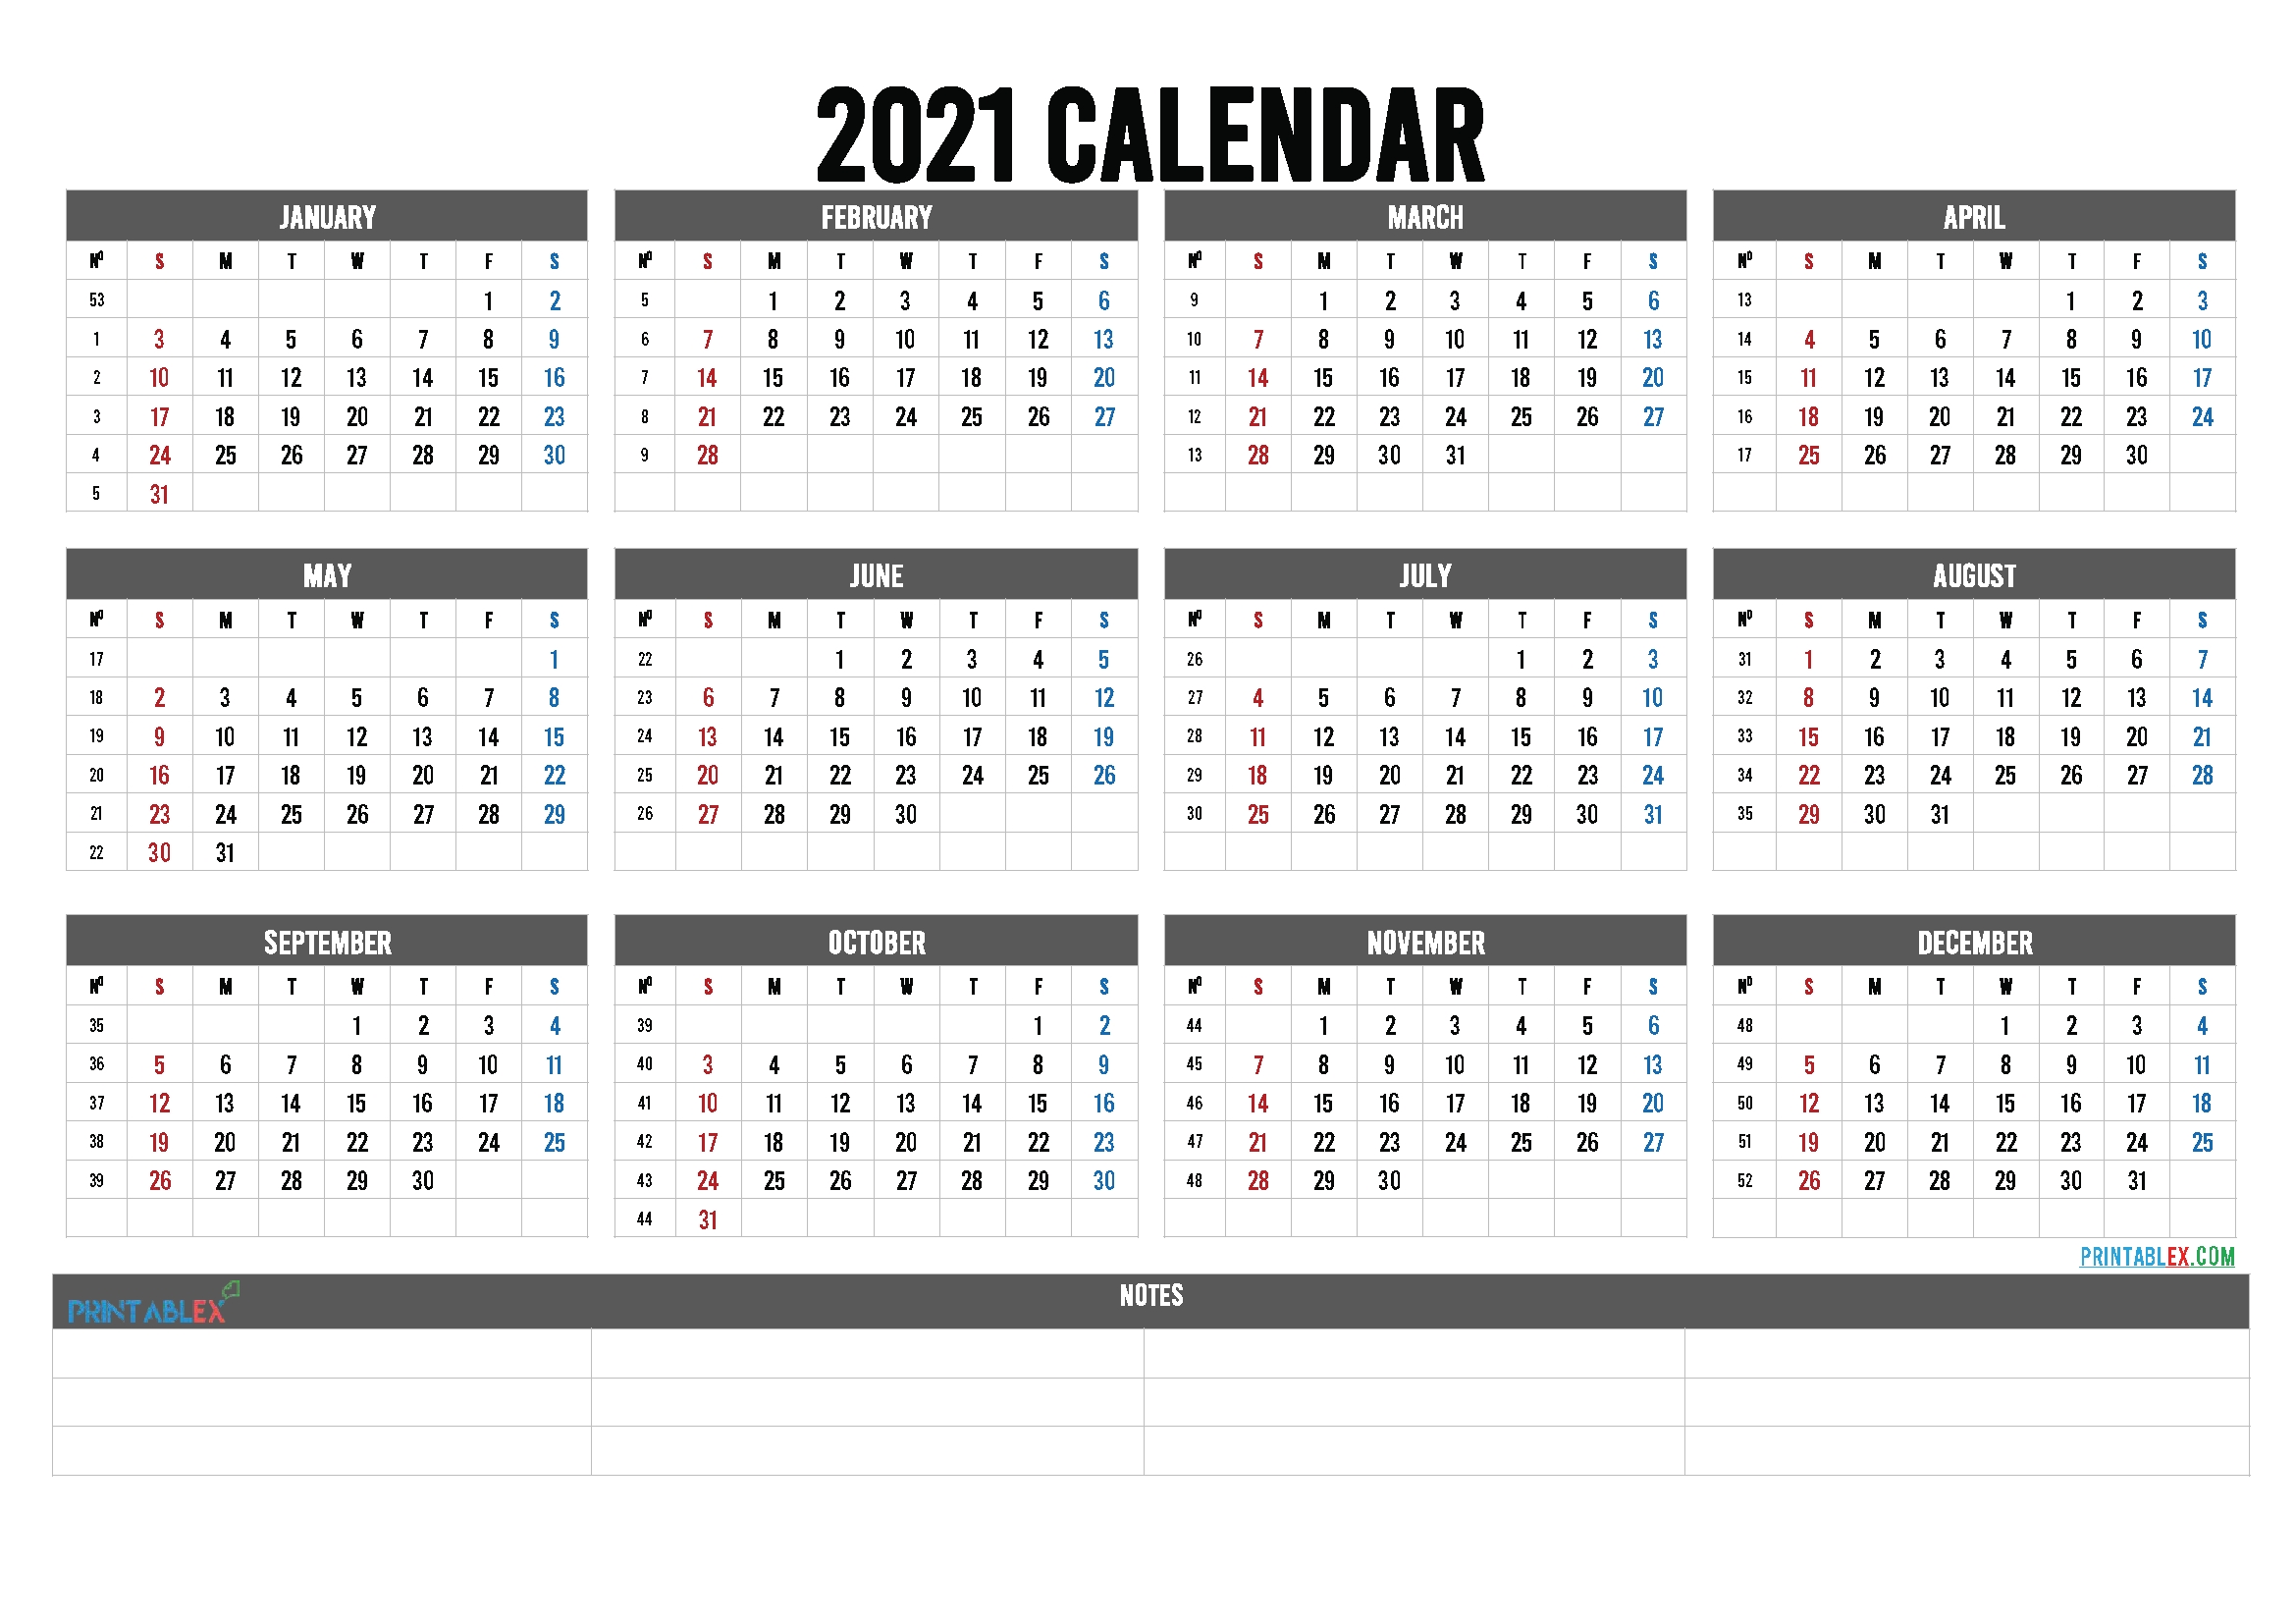 Calendar 2021 With Weeks Number Template | Calendar ...